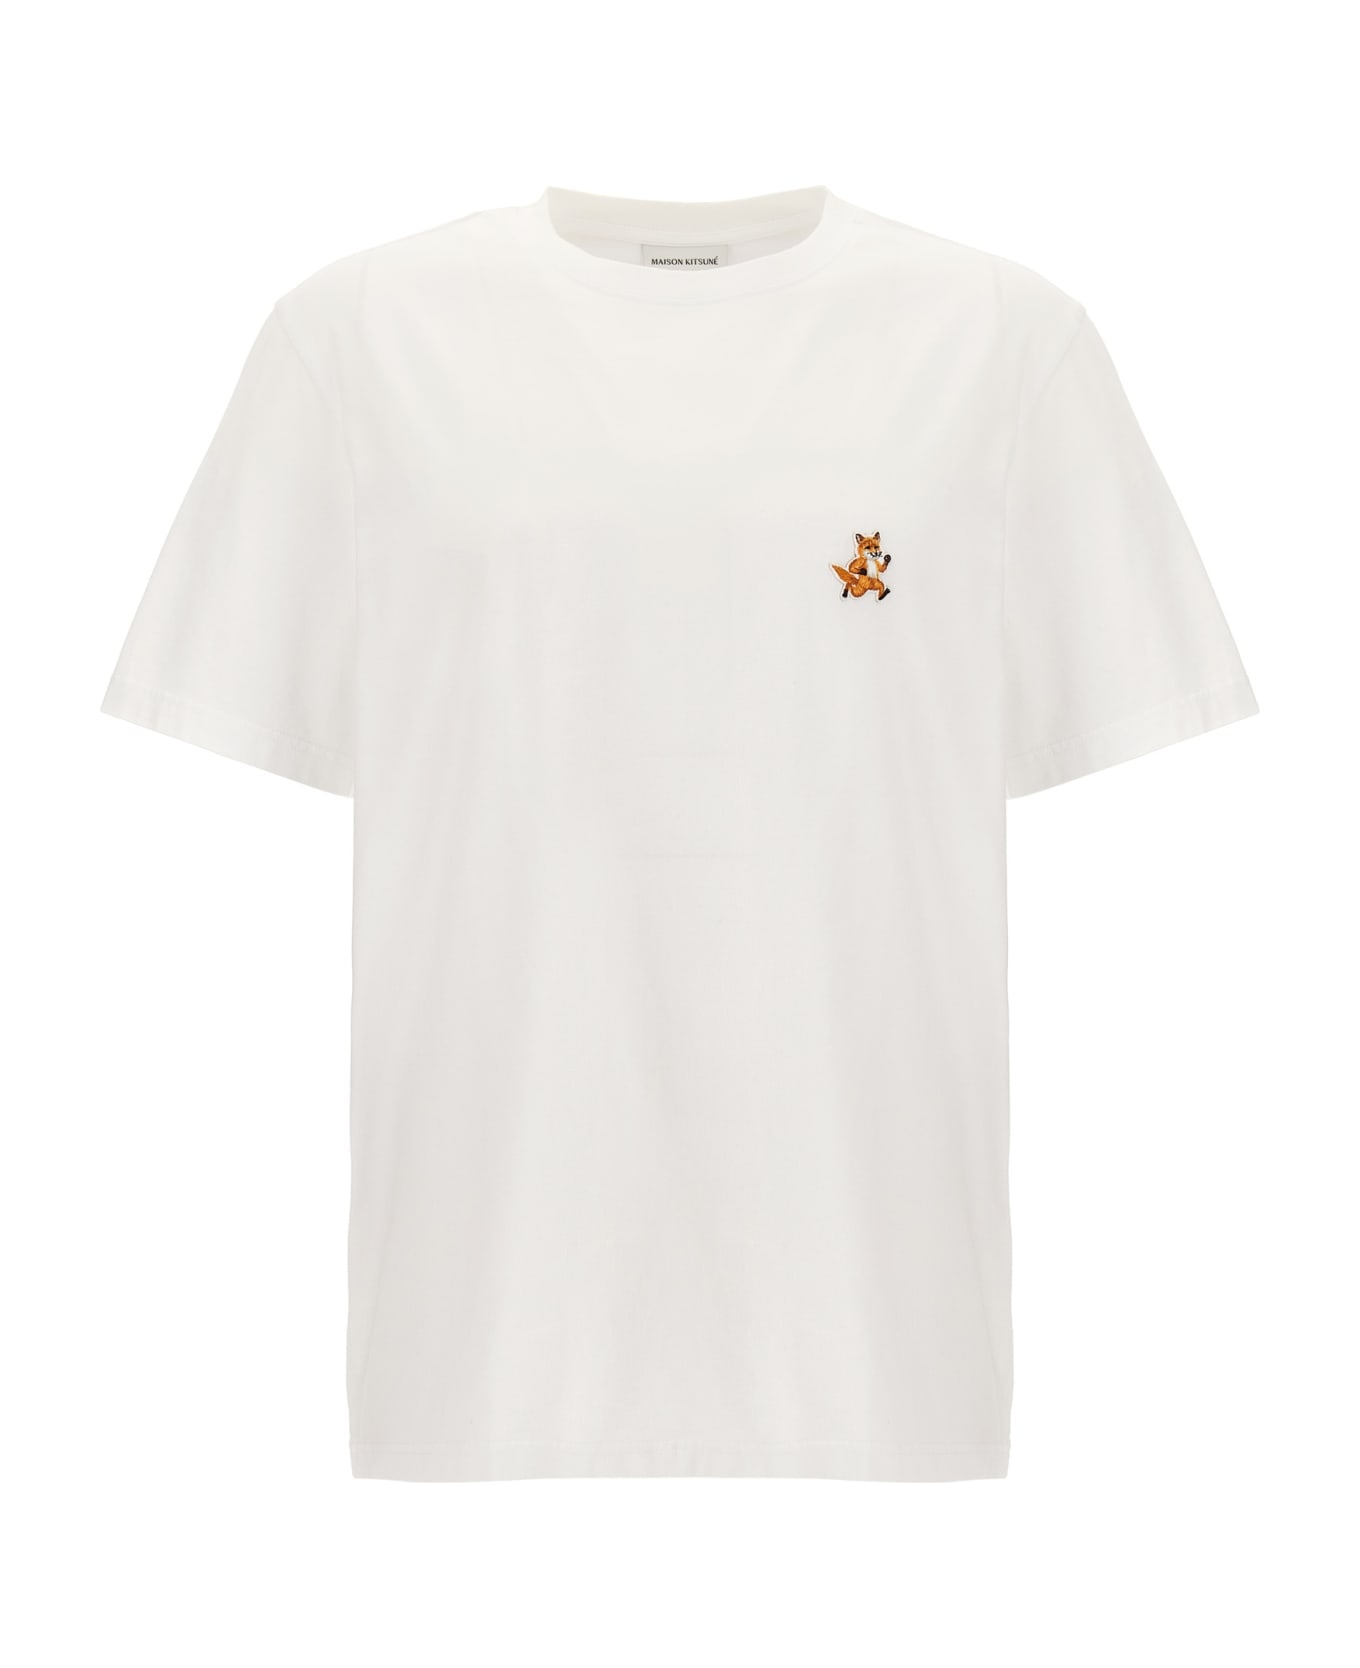 Maison Kitsuné 'speedy Fox Patch' T-shirt - White